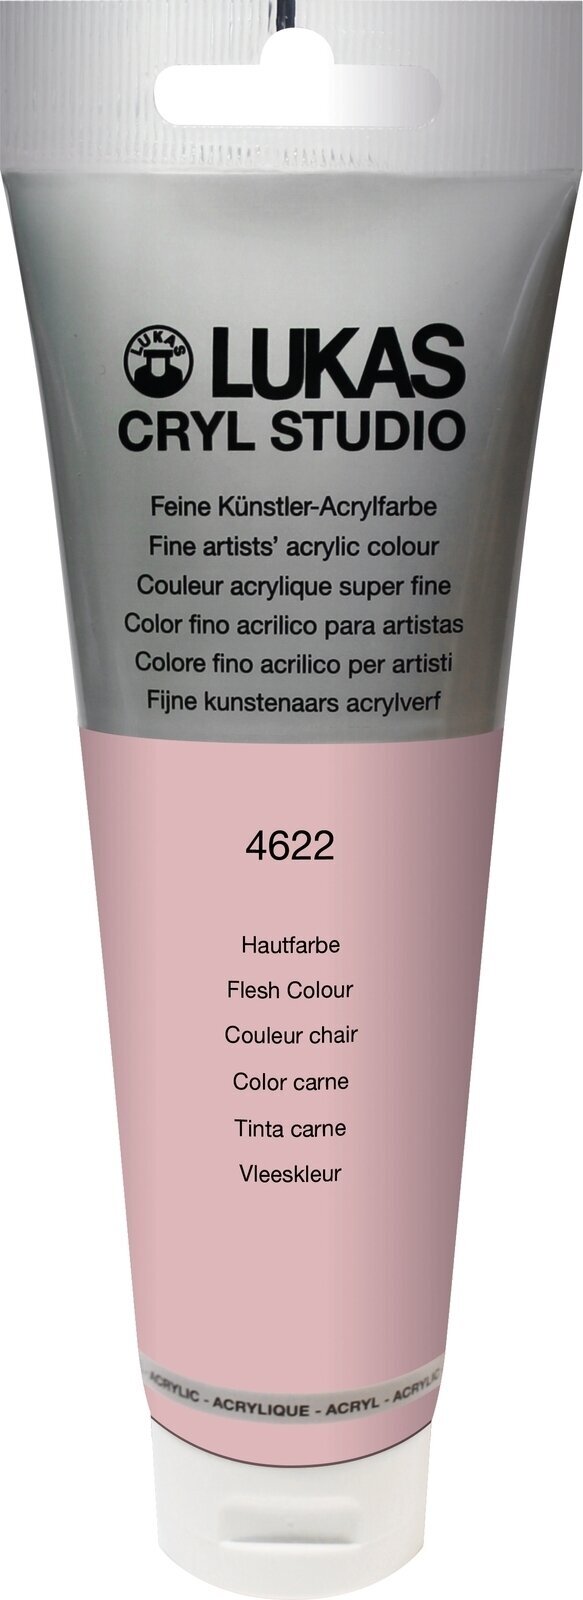 Akrylová barva Lukas Cryl Studio Acrylic Paint Plastic Tube Akrylová barva Peach Pink 125 ml 1 ks